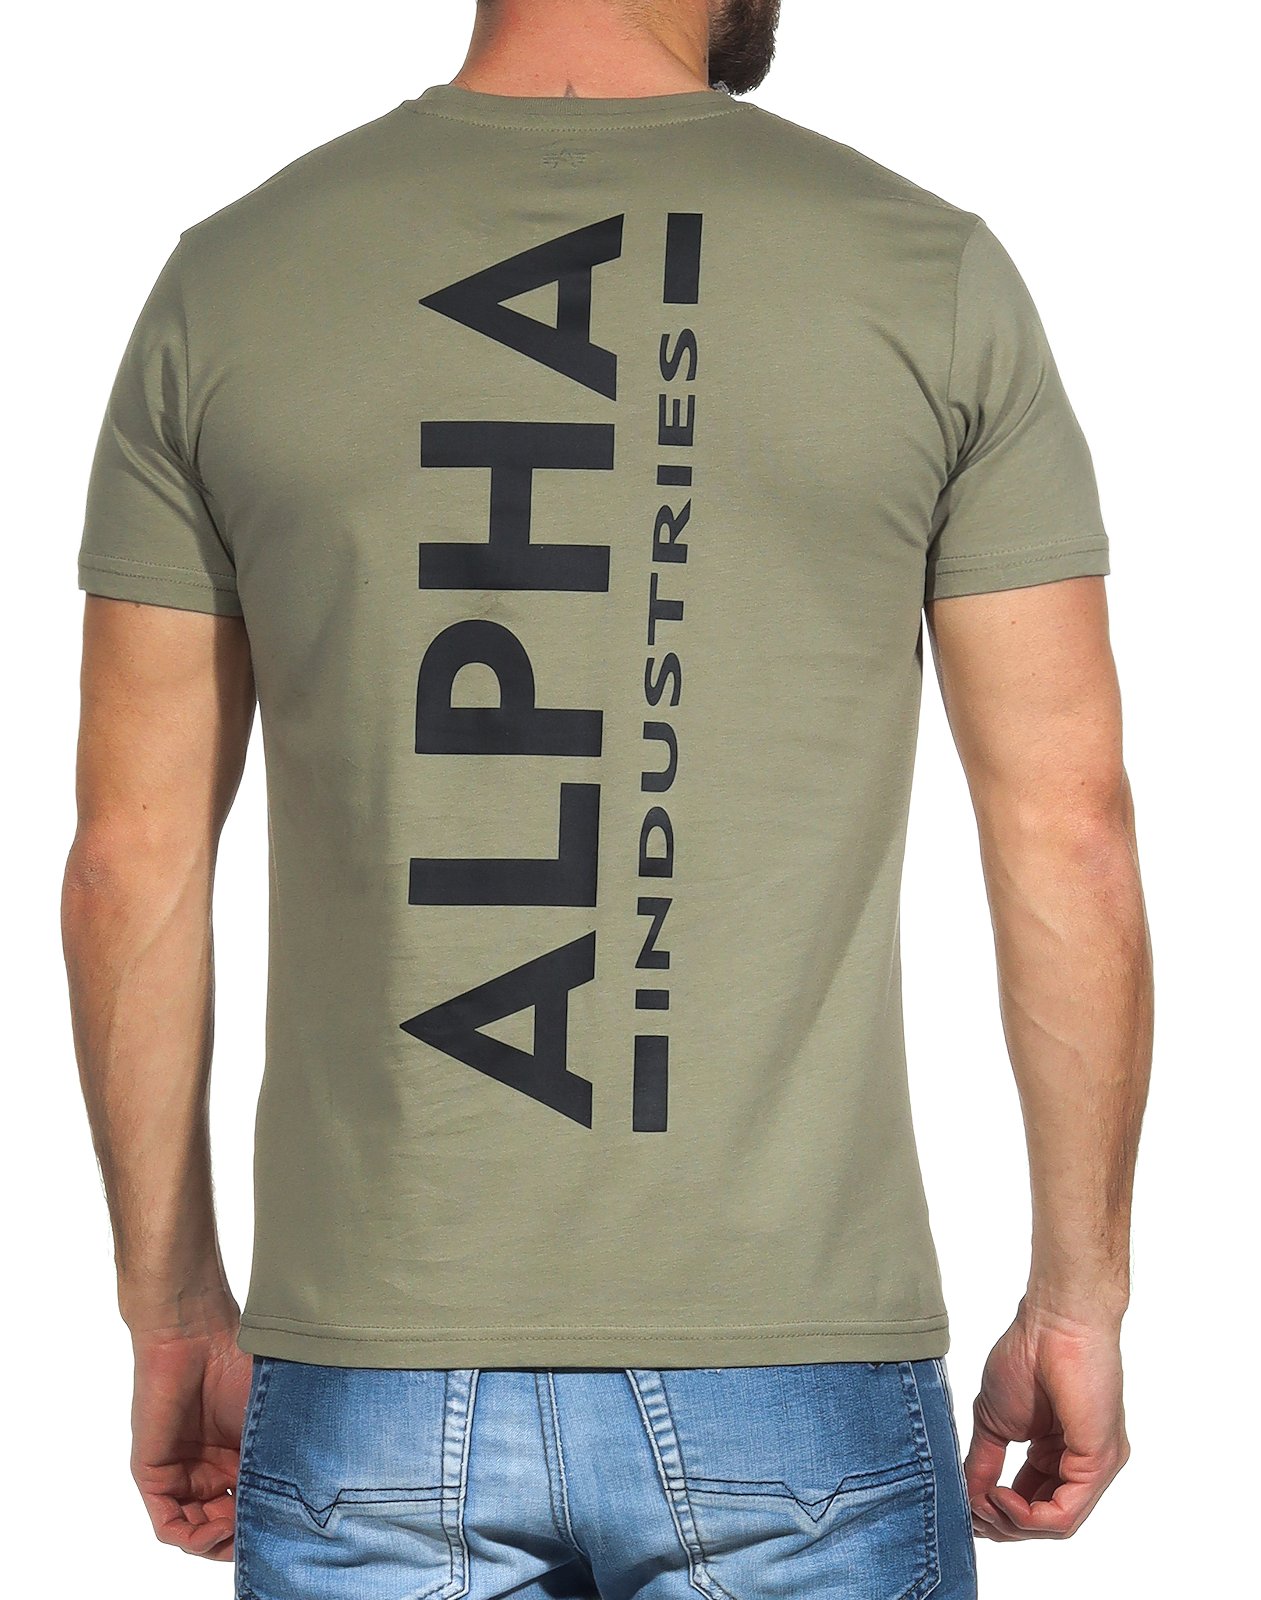 L.E.M.B. Company | Herren Oberteile 128507 T-Shirts Alpha Lifestyle T | Herren Industries | T-Shirt | Backprint